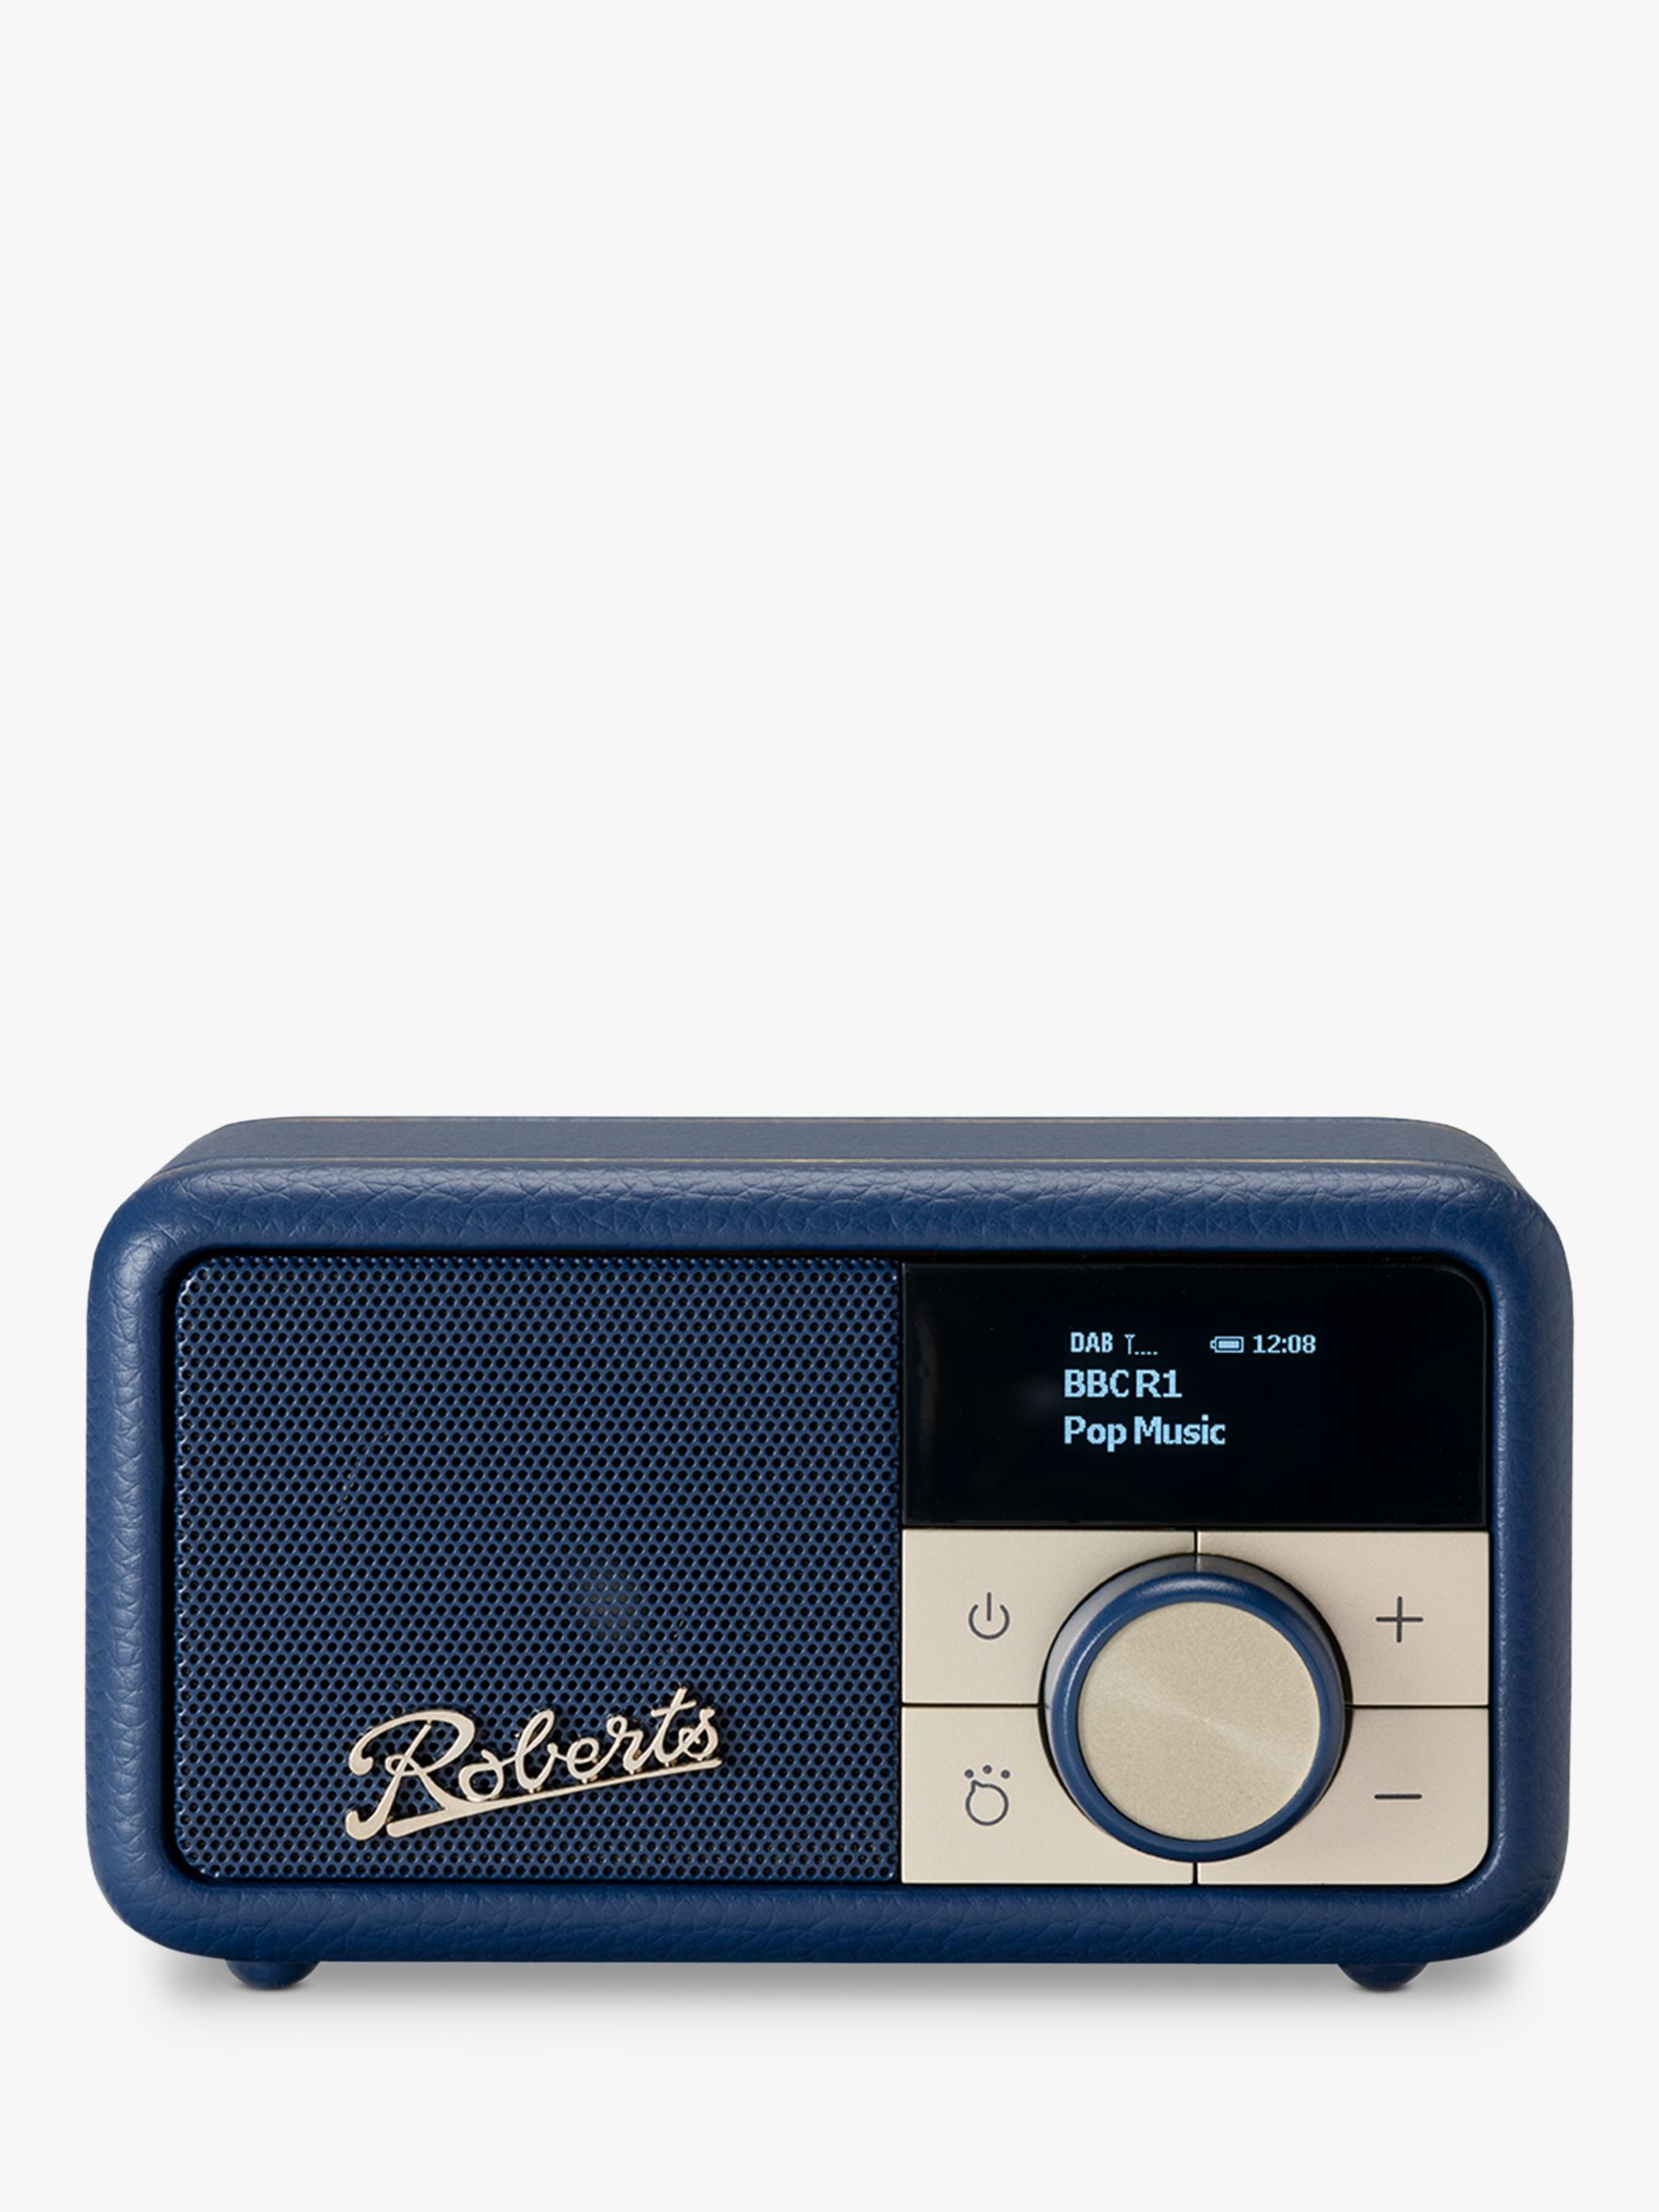 Roberts Revival Petite DAB/DAB+/FM Bluetooth Portable Digital Radio, Midnight Blue